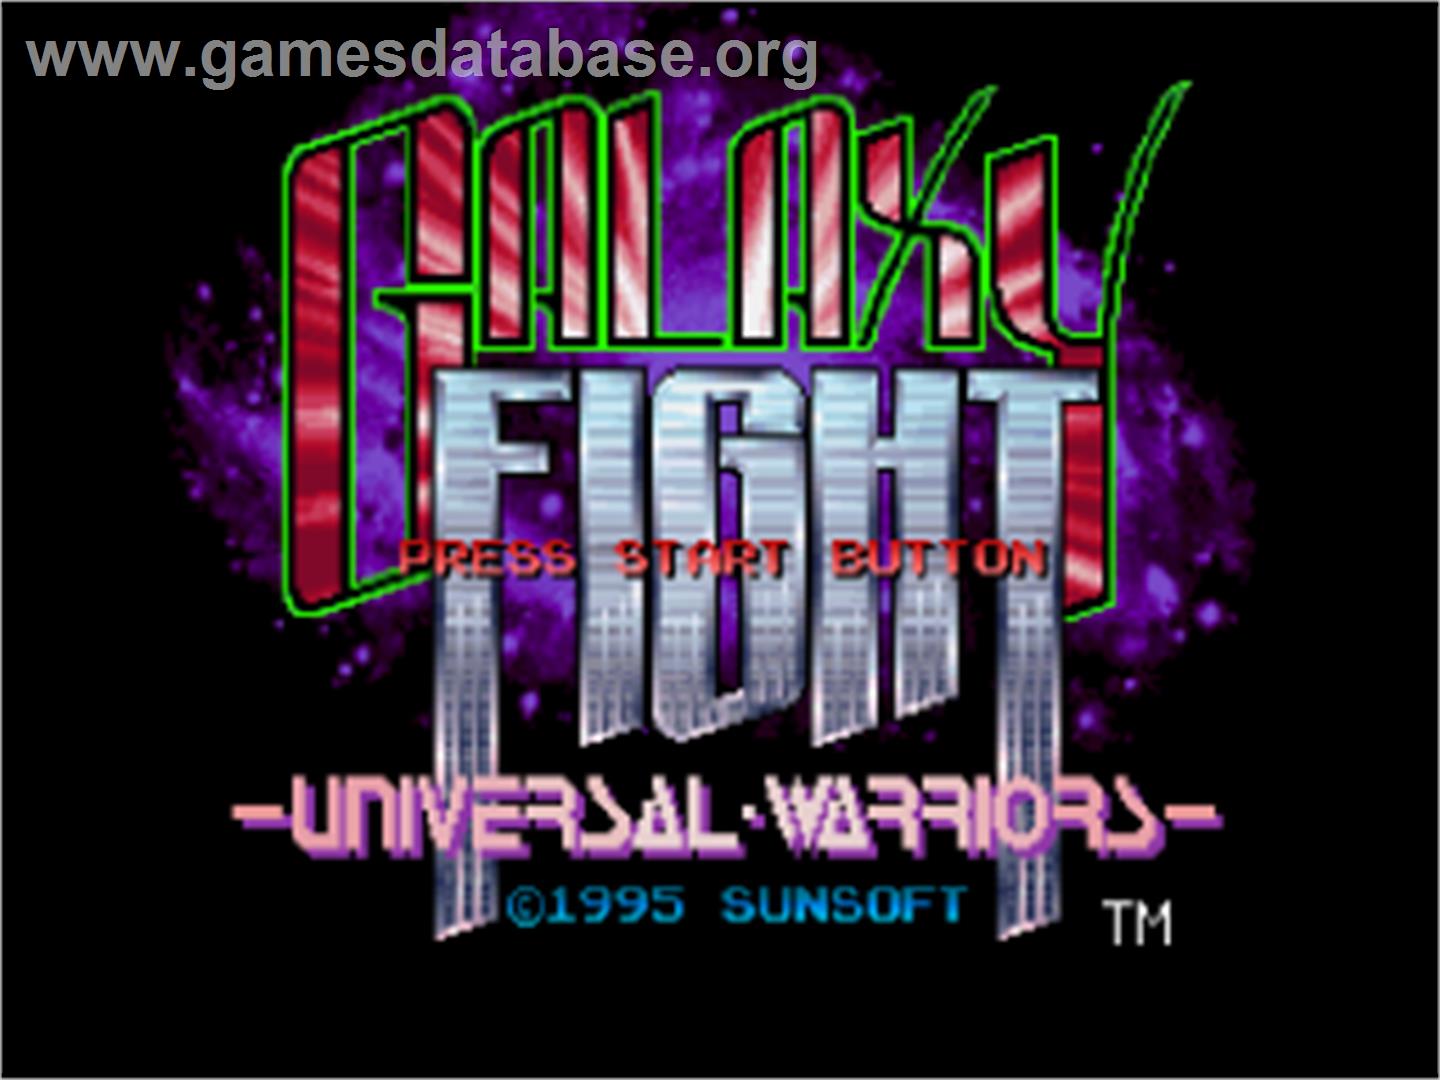 Galaxy Fight - Universal Warriors - Sega Saturn - Artwork - Title Screen